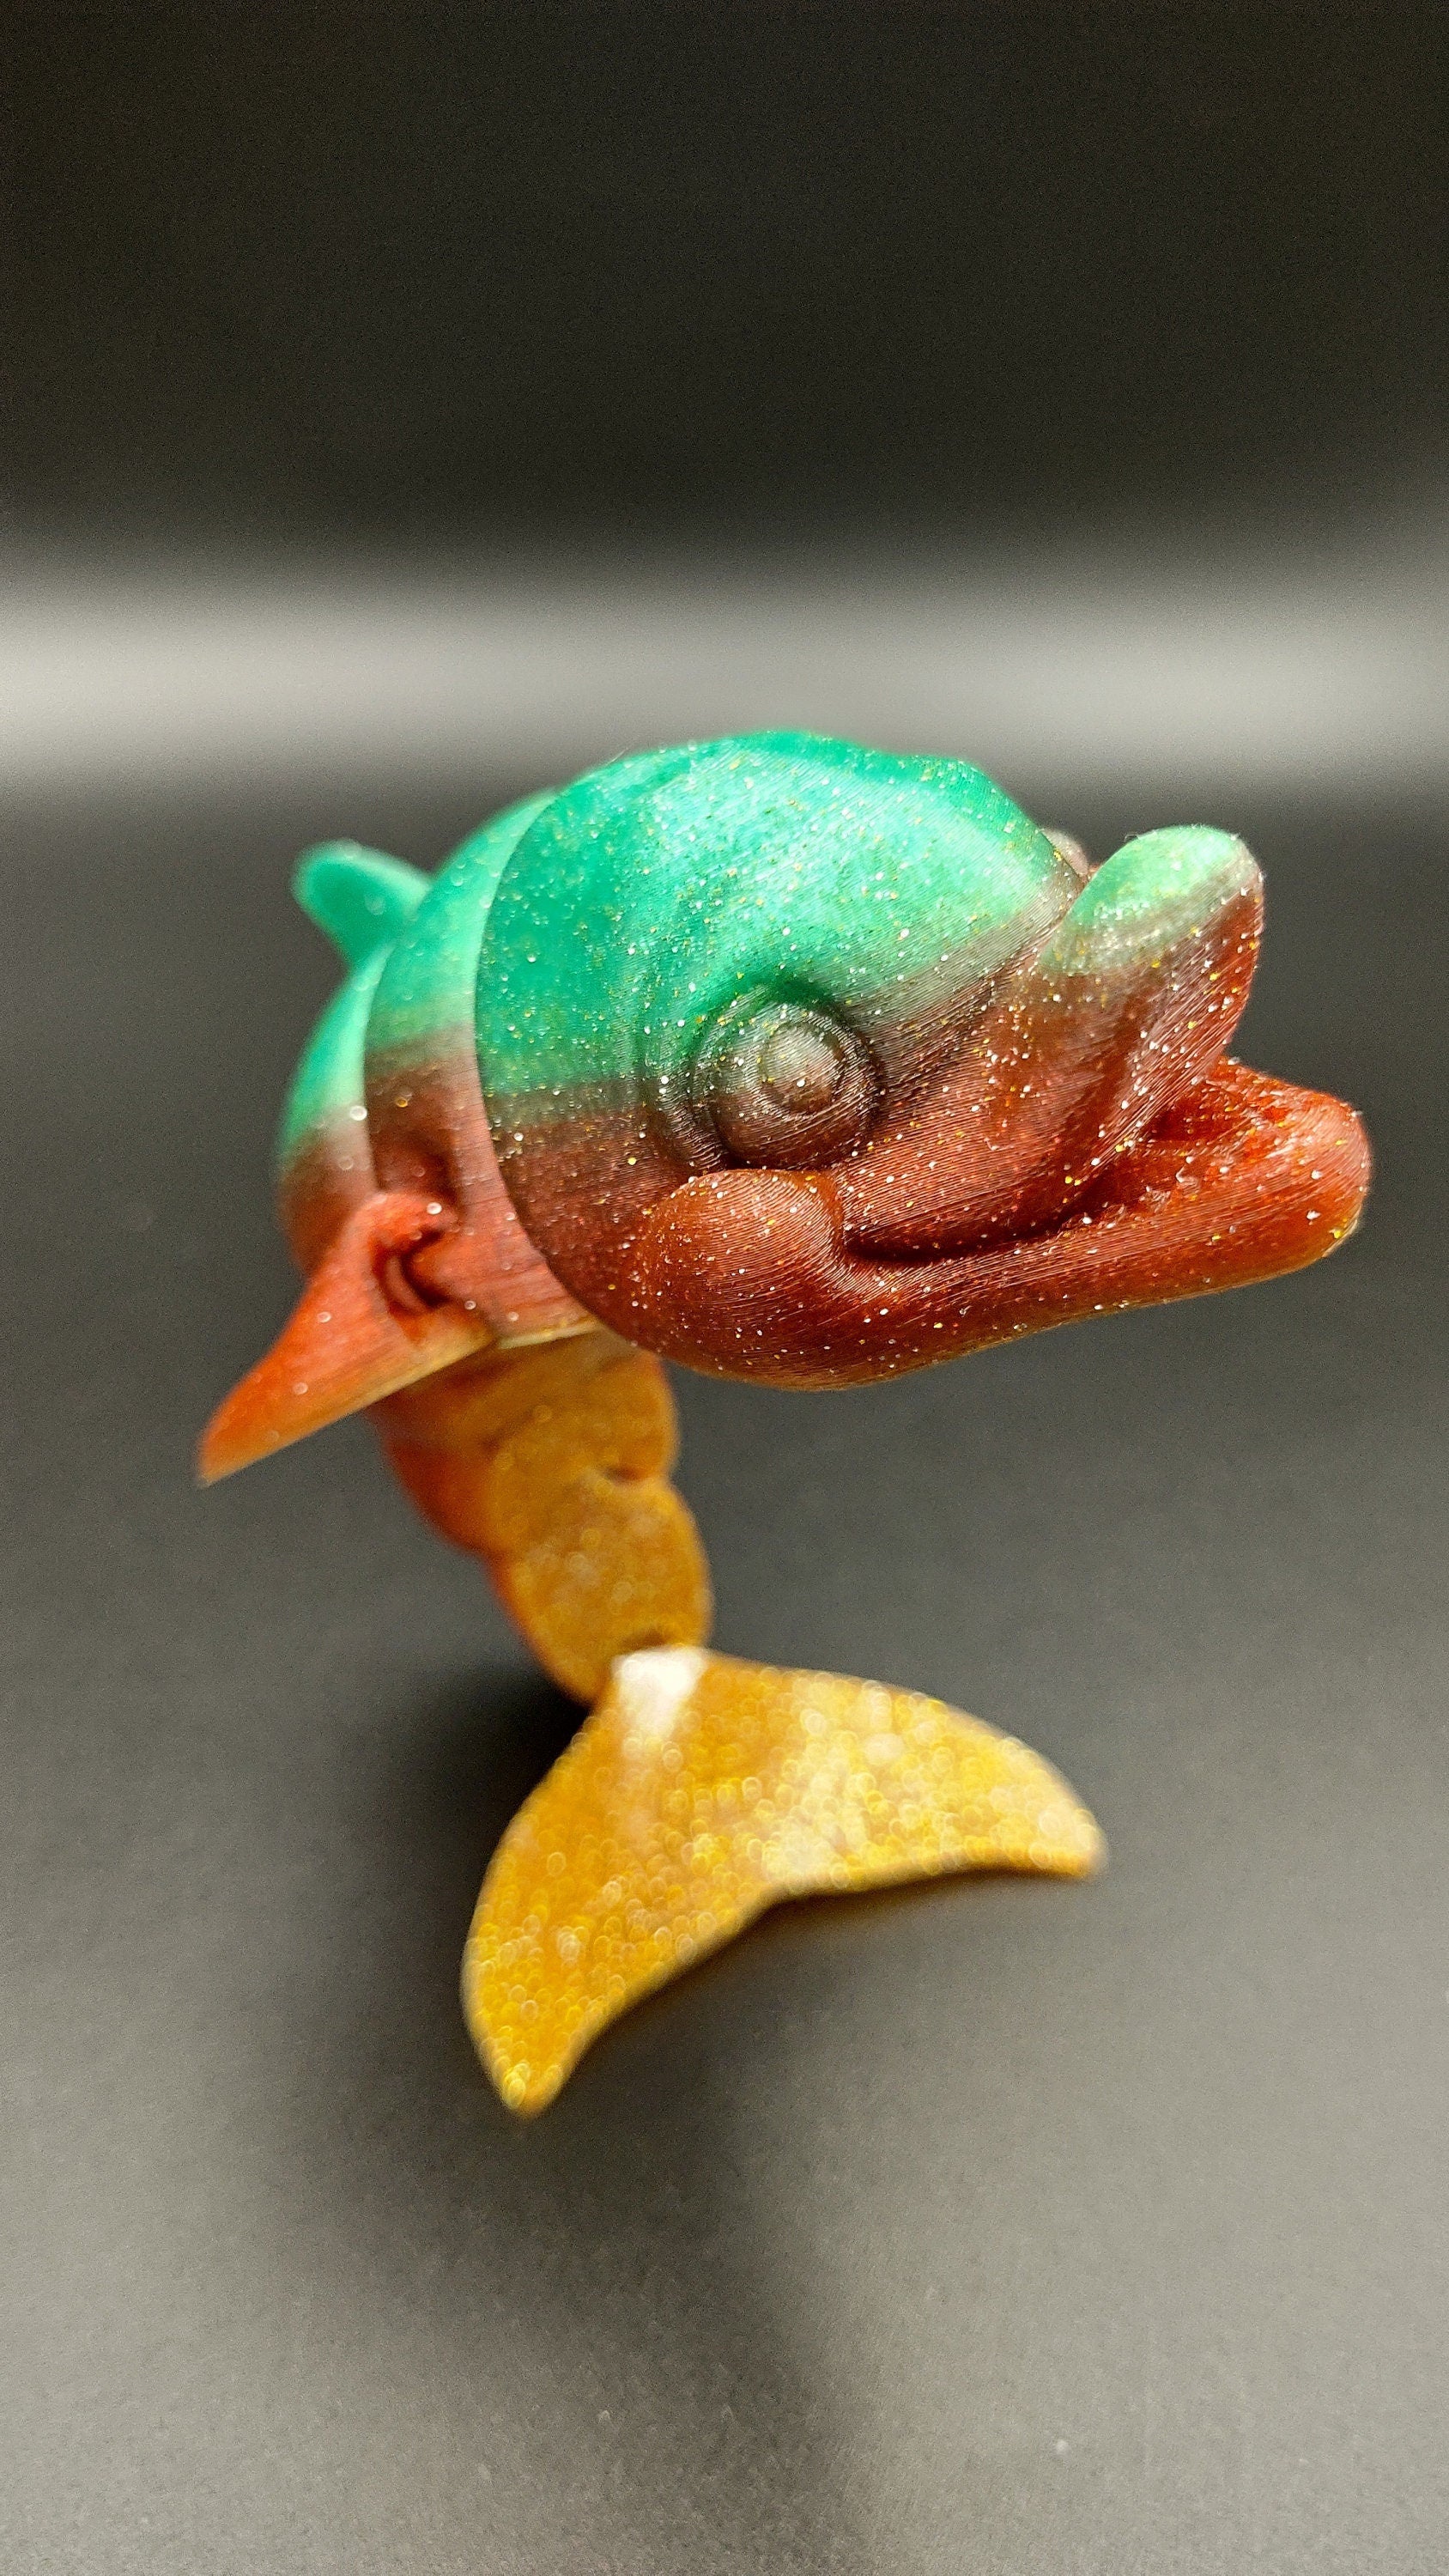 Sparkle Multi Color Flexi Dolphin. Articulating Super Cute Dolphin. Great fidget toy. Desk buddy. Sensory toy. No surprise rainbow.